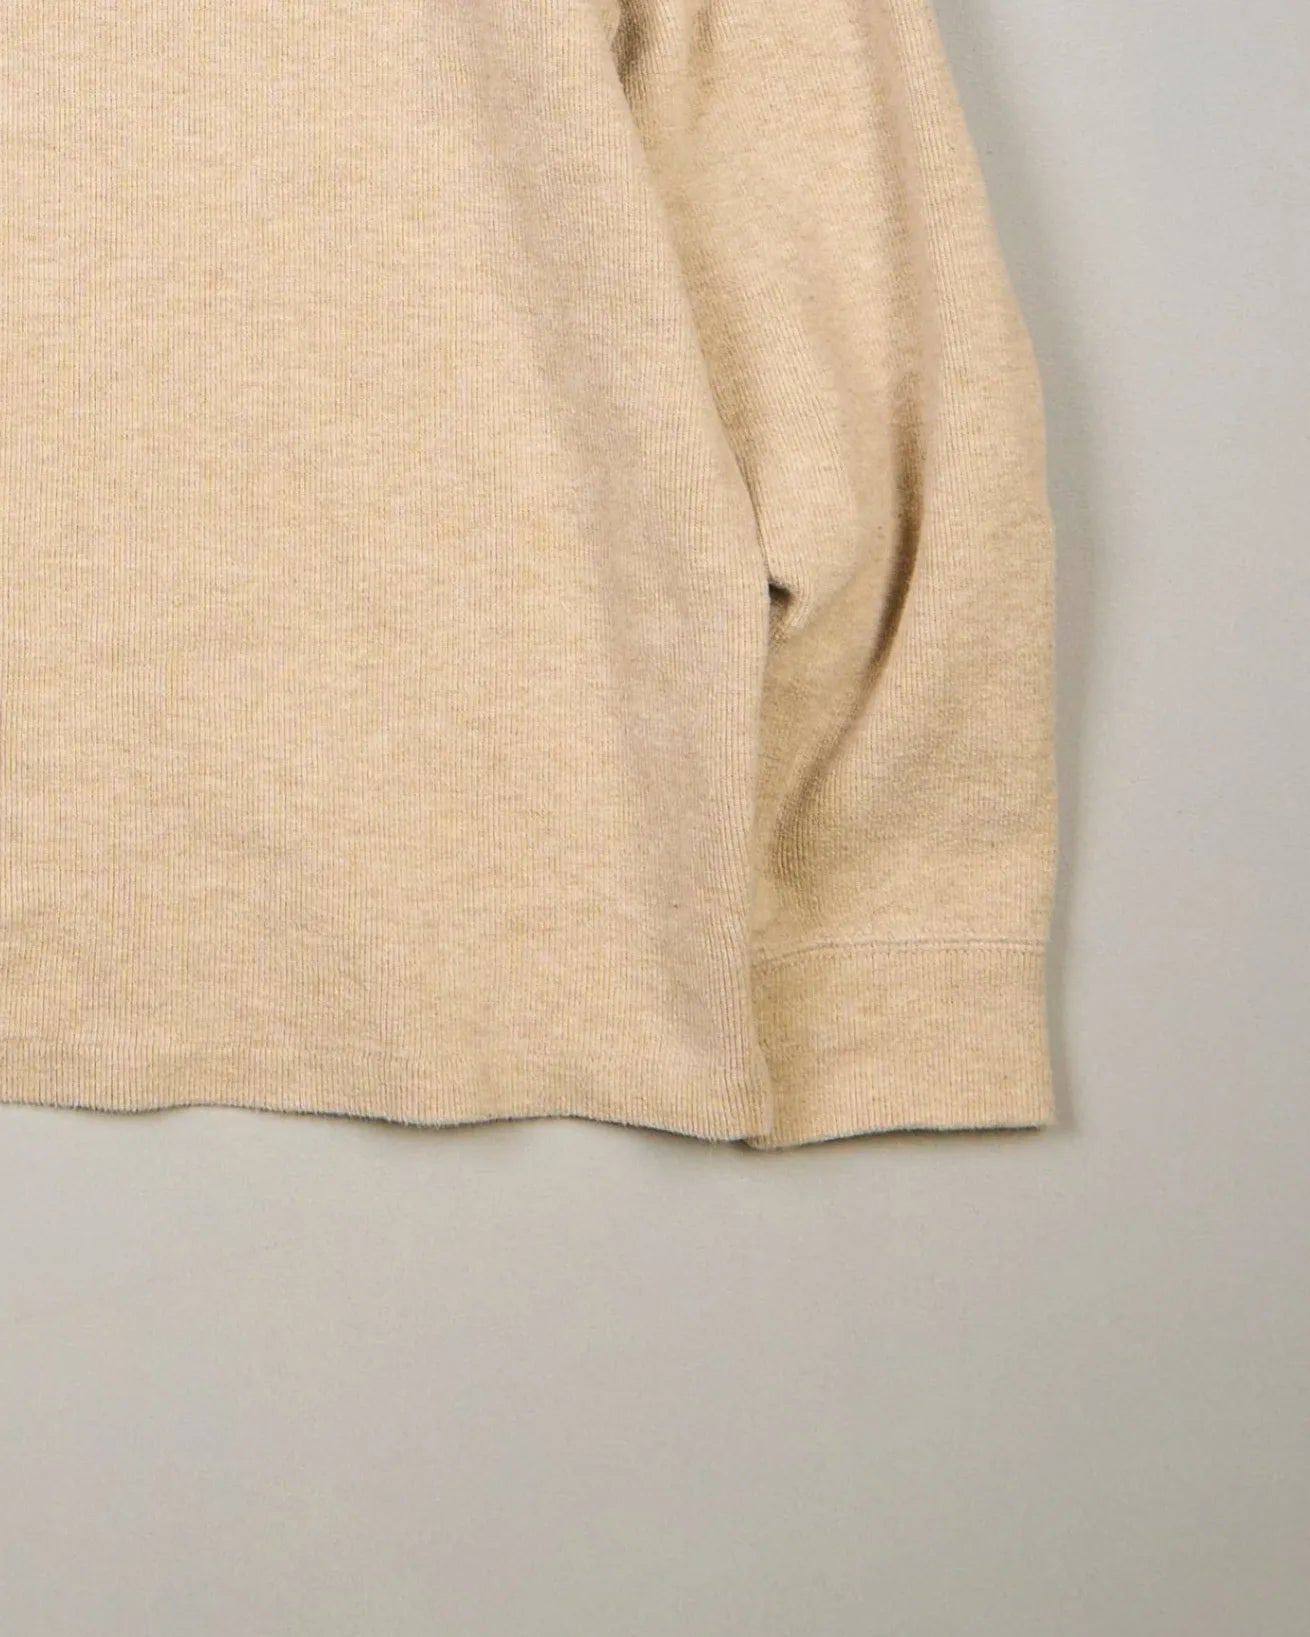 Ralph Lauren - Sweater (M) Bottom Right